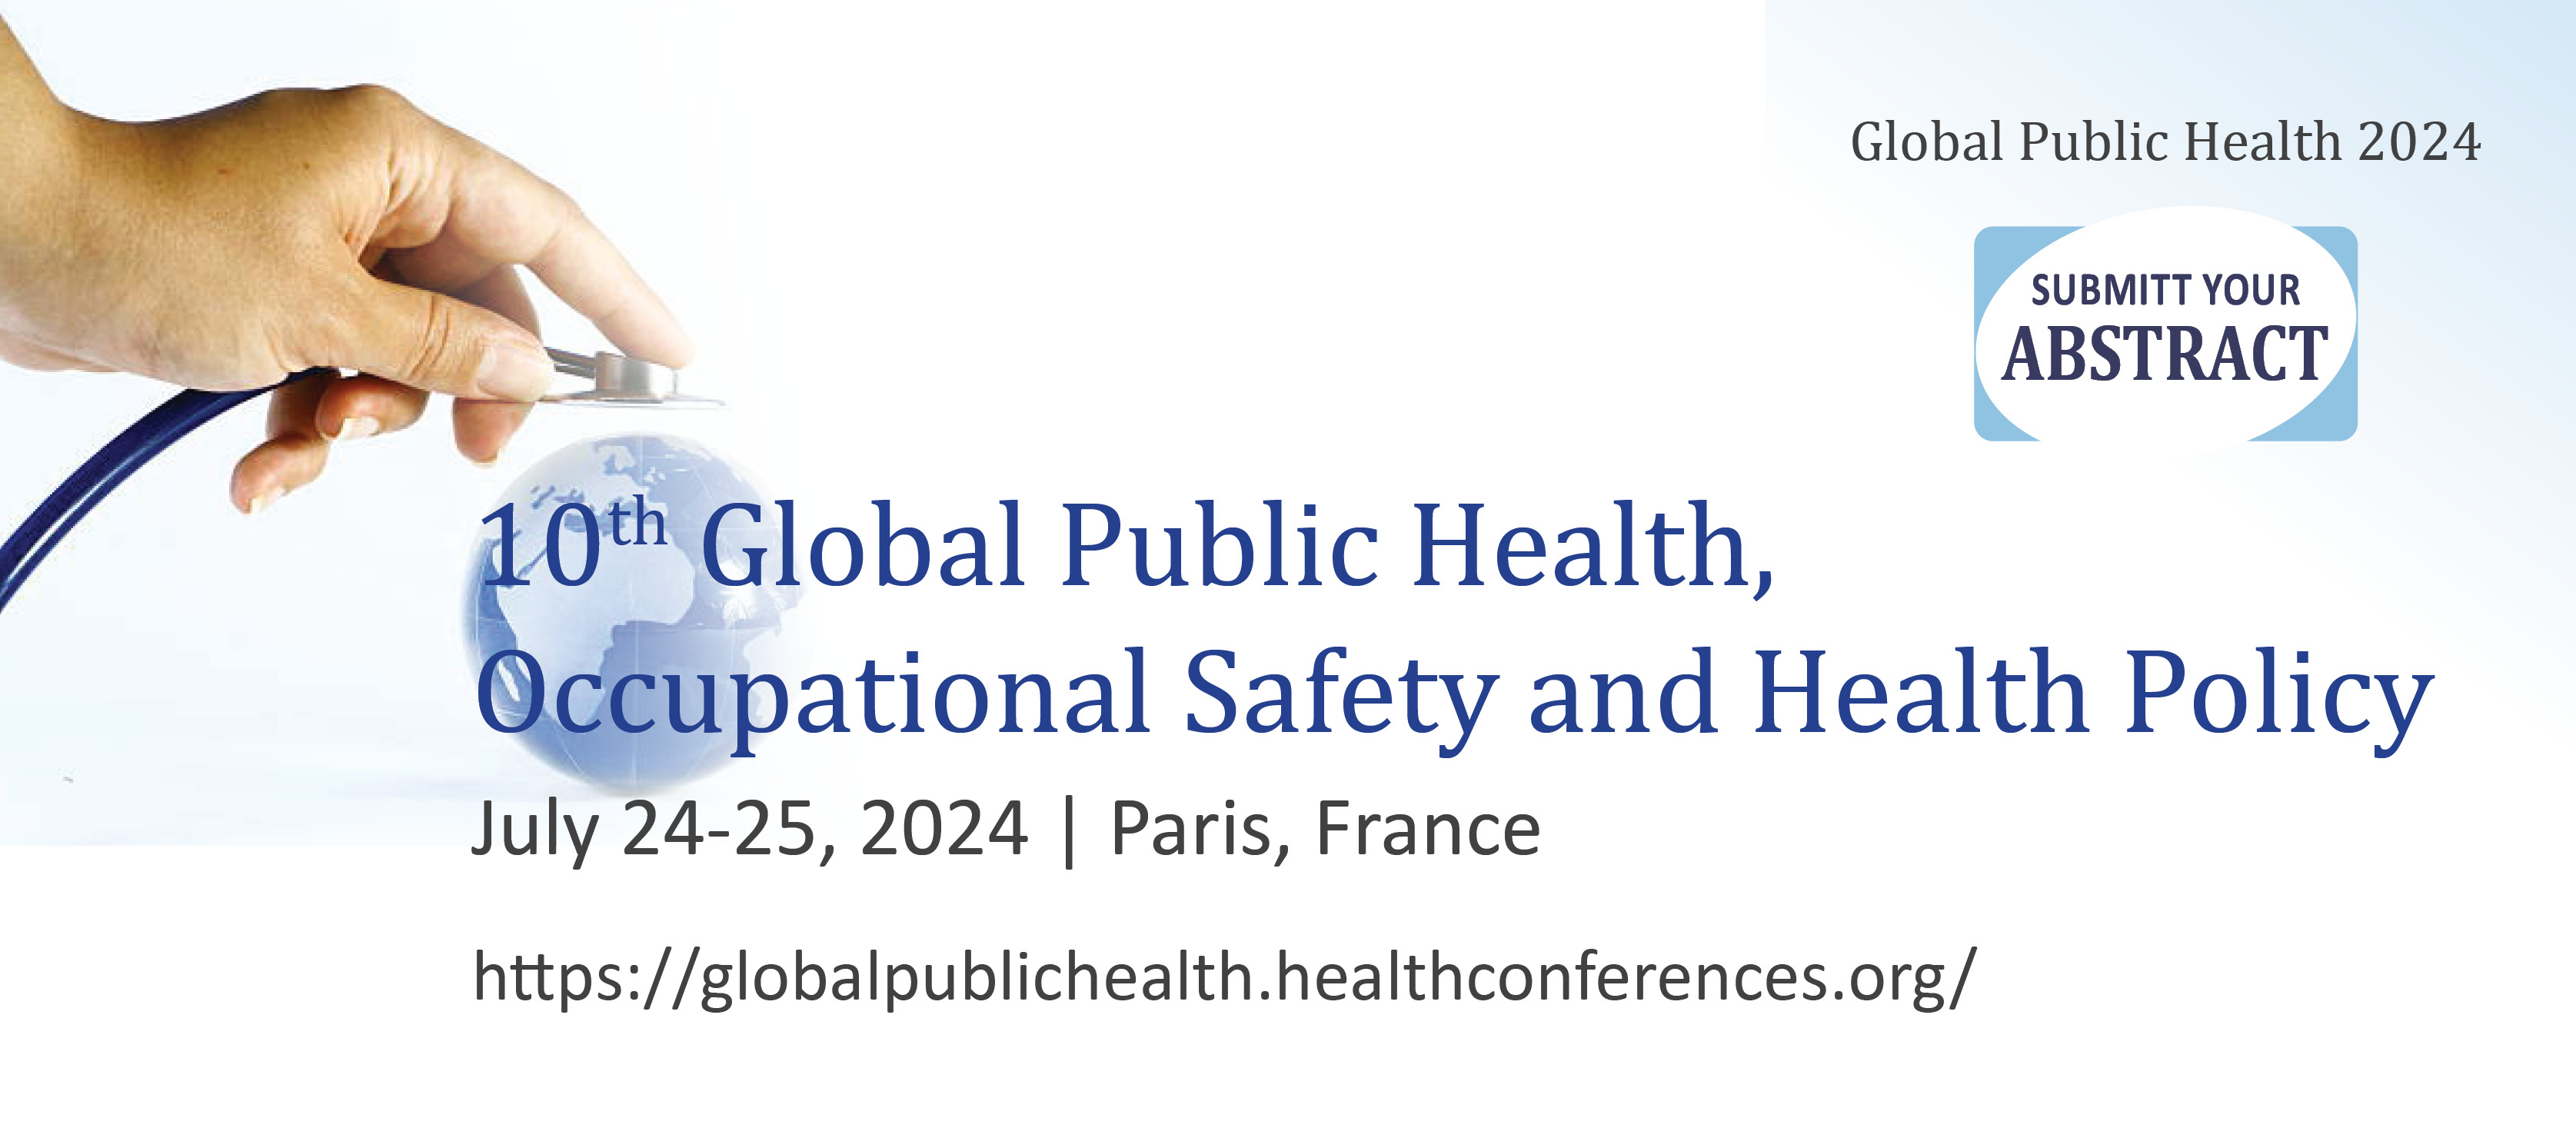  - Global Public Health 2024